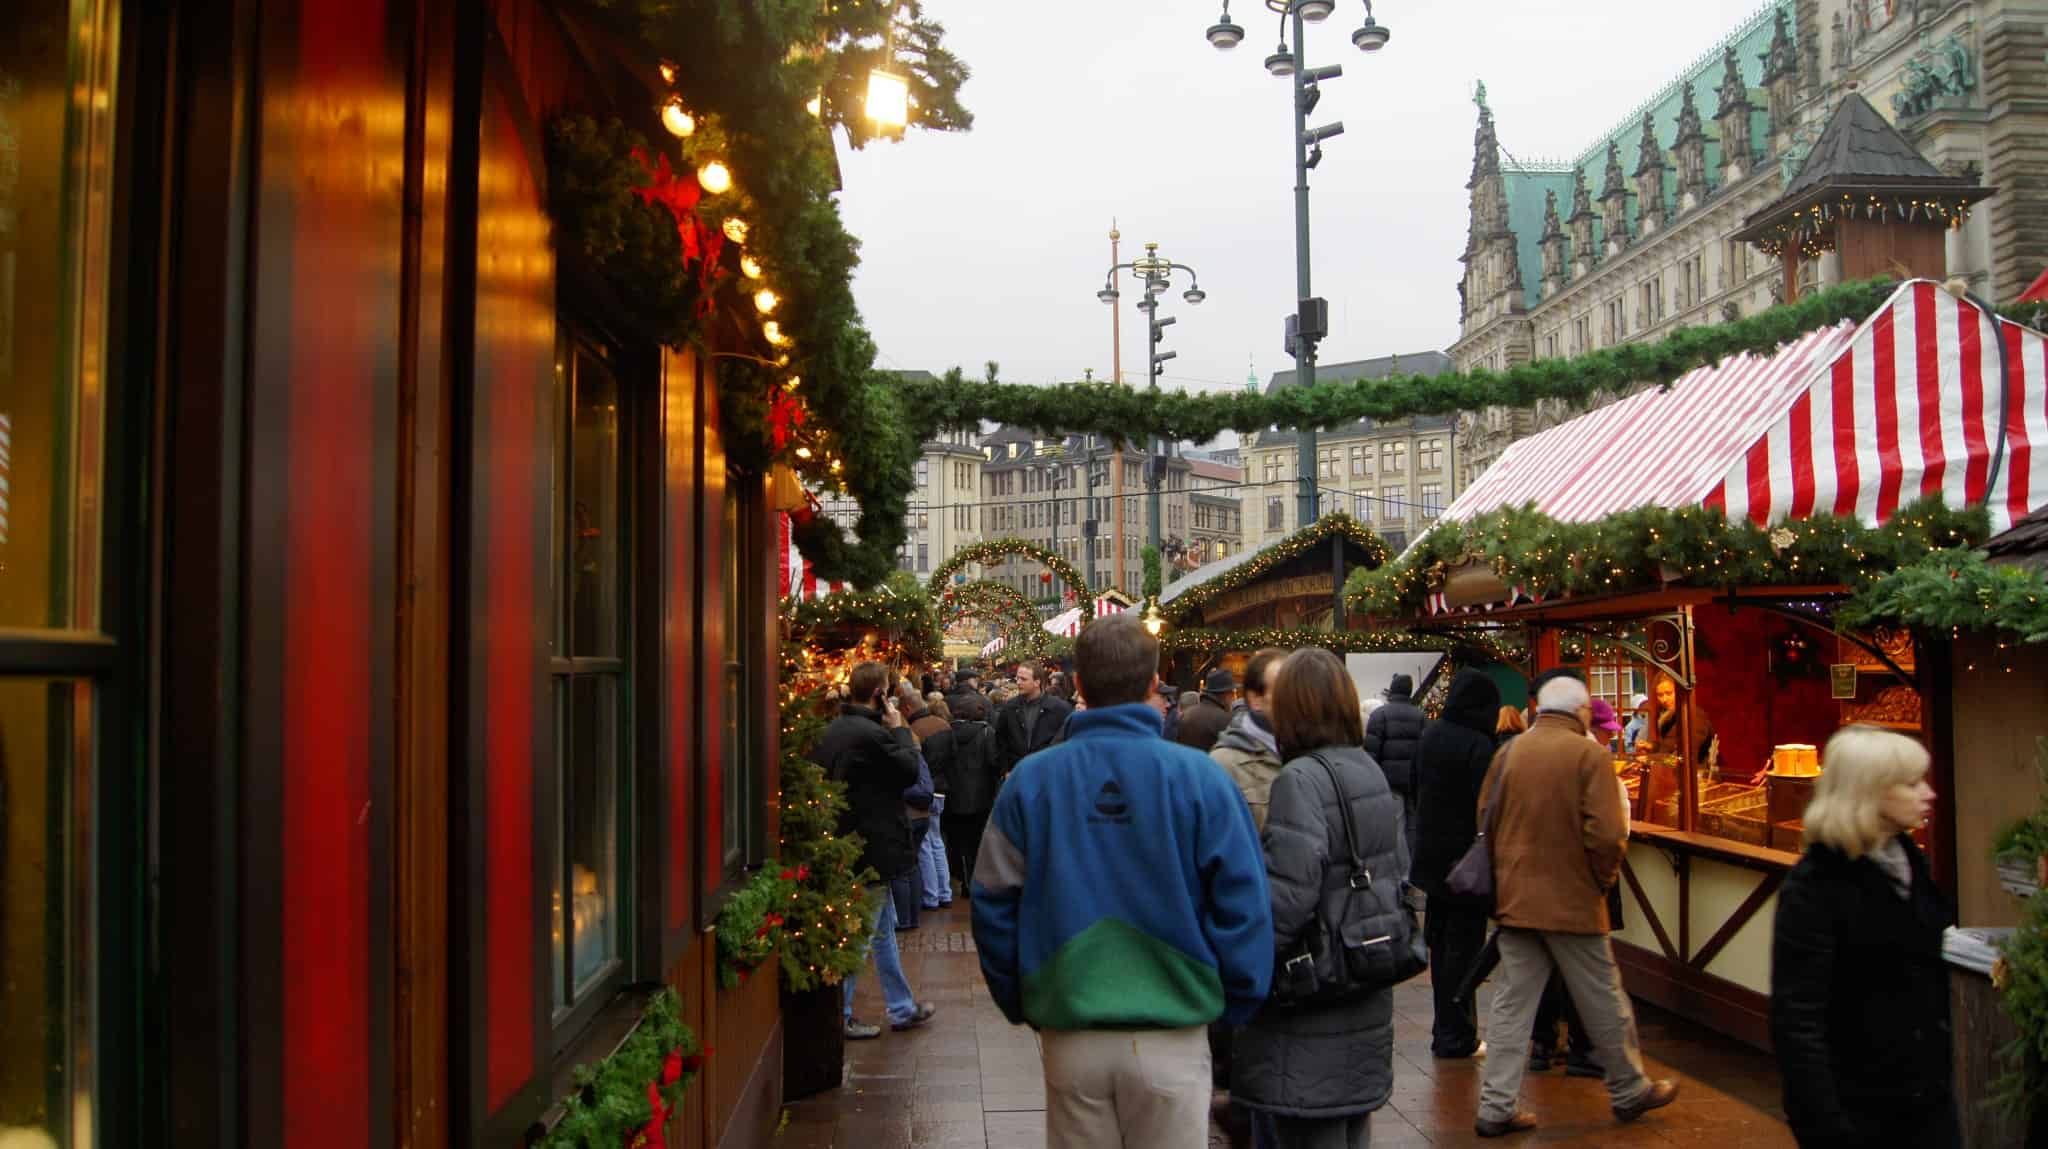 Hamburg's biggest Christmas market